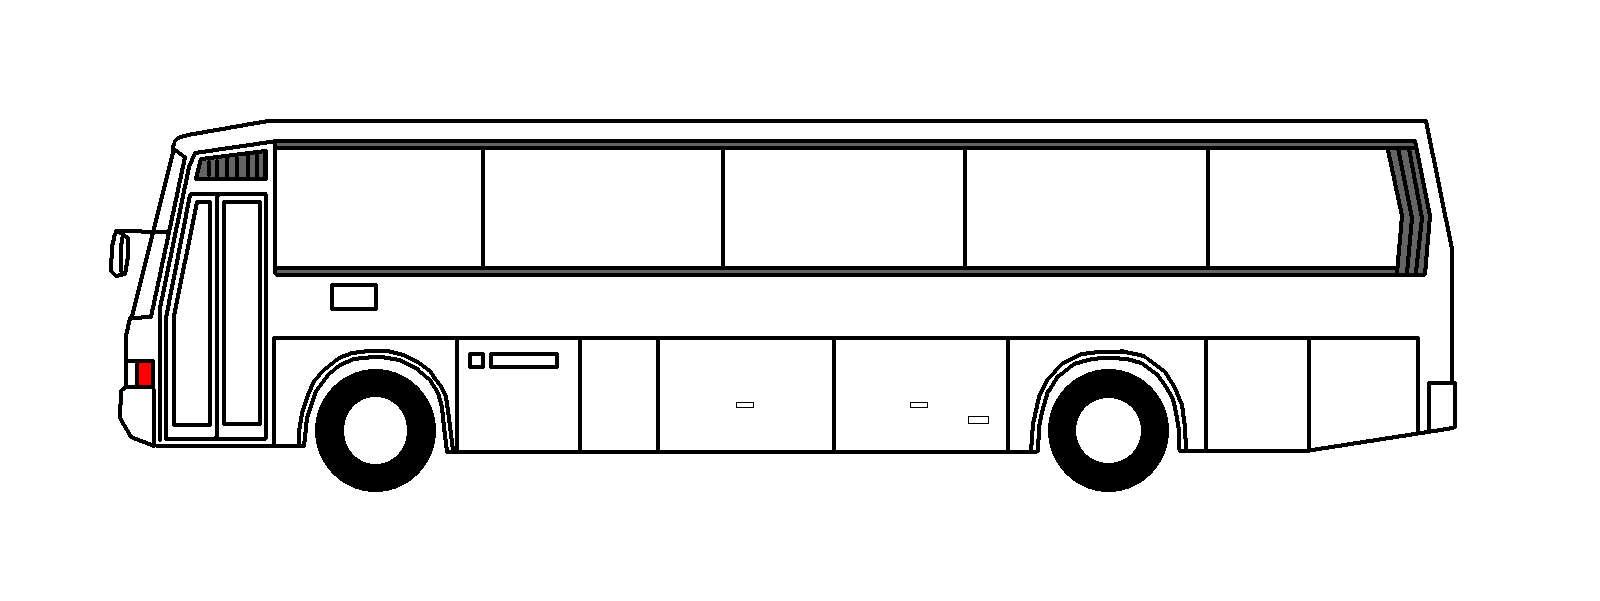 School Bus Clip Art Black And White - ClipArt Best